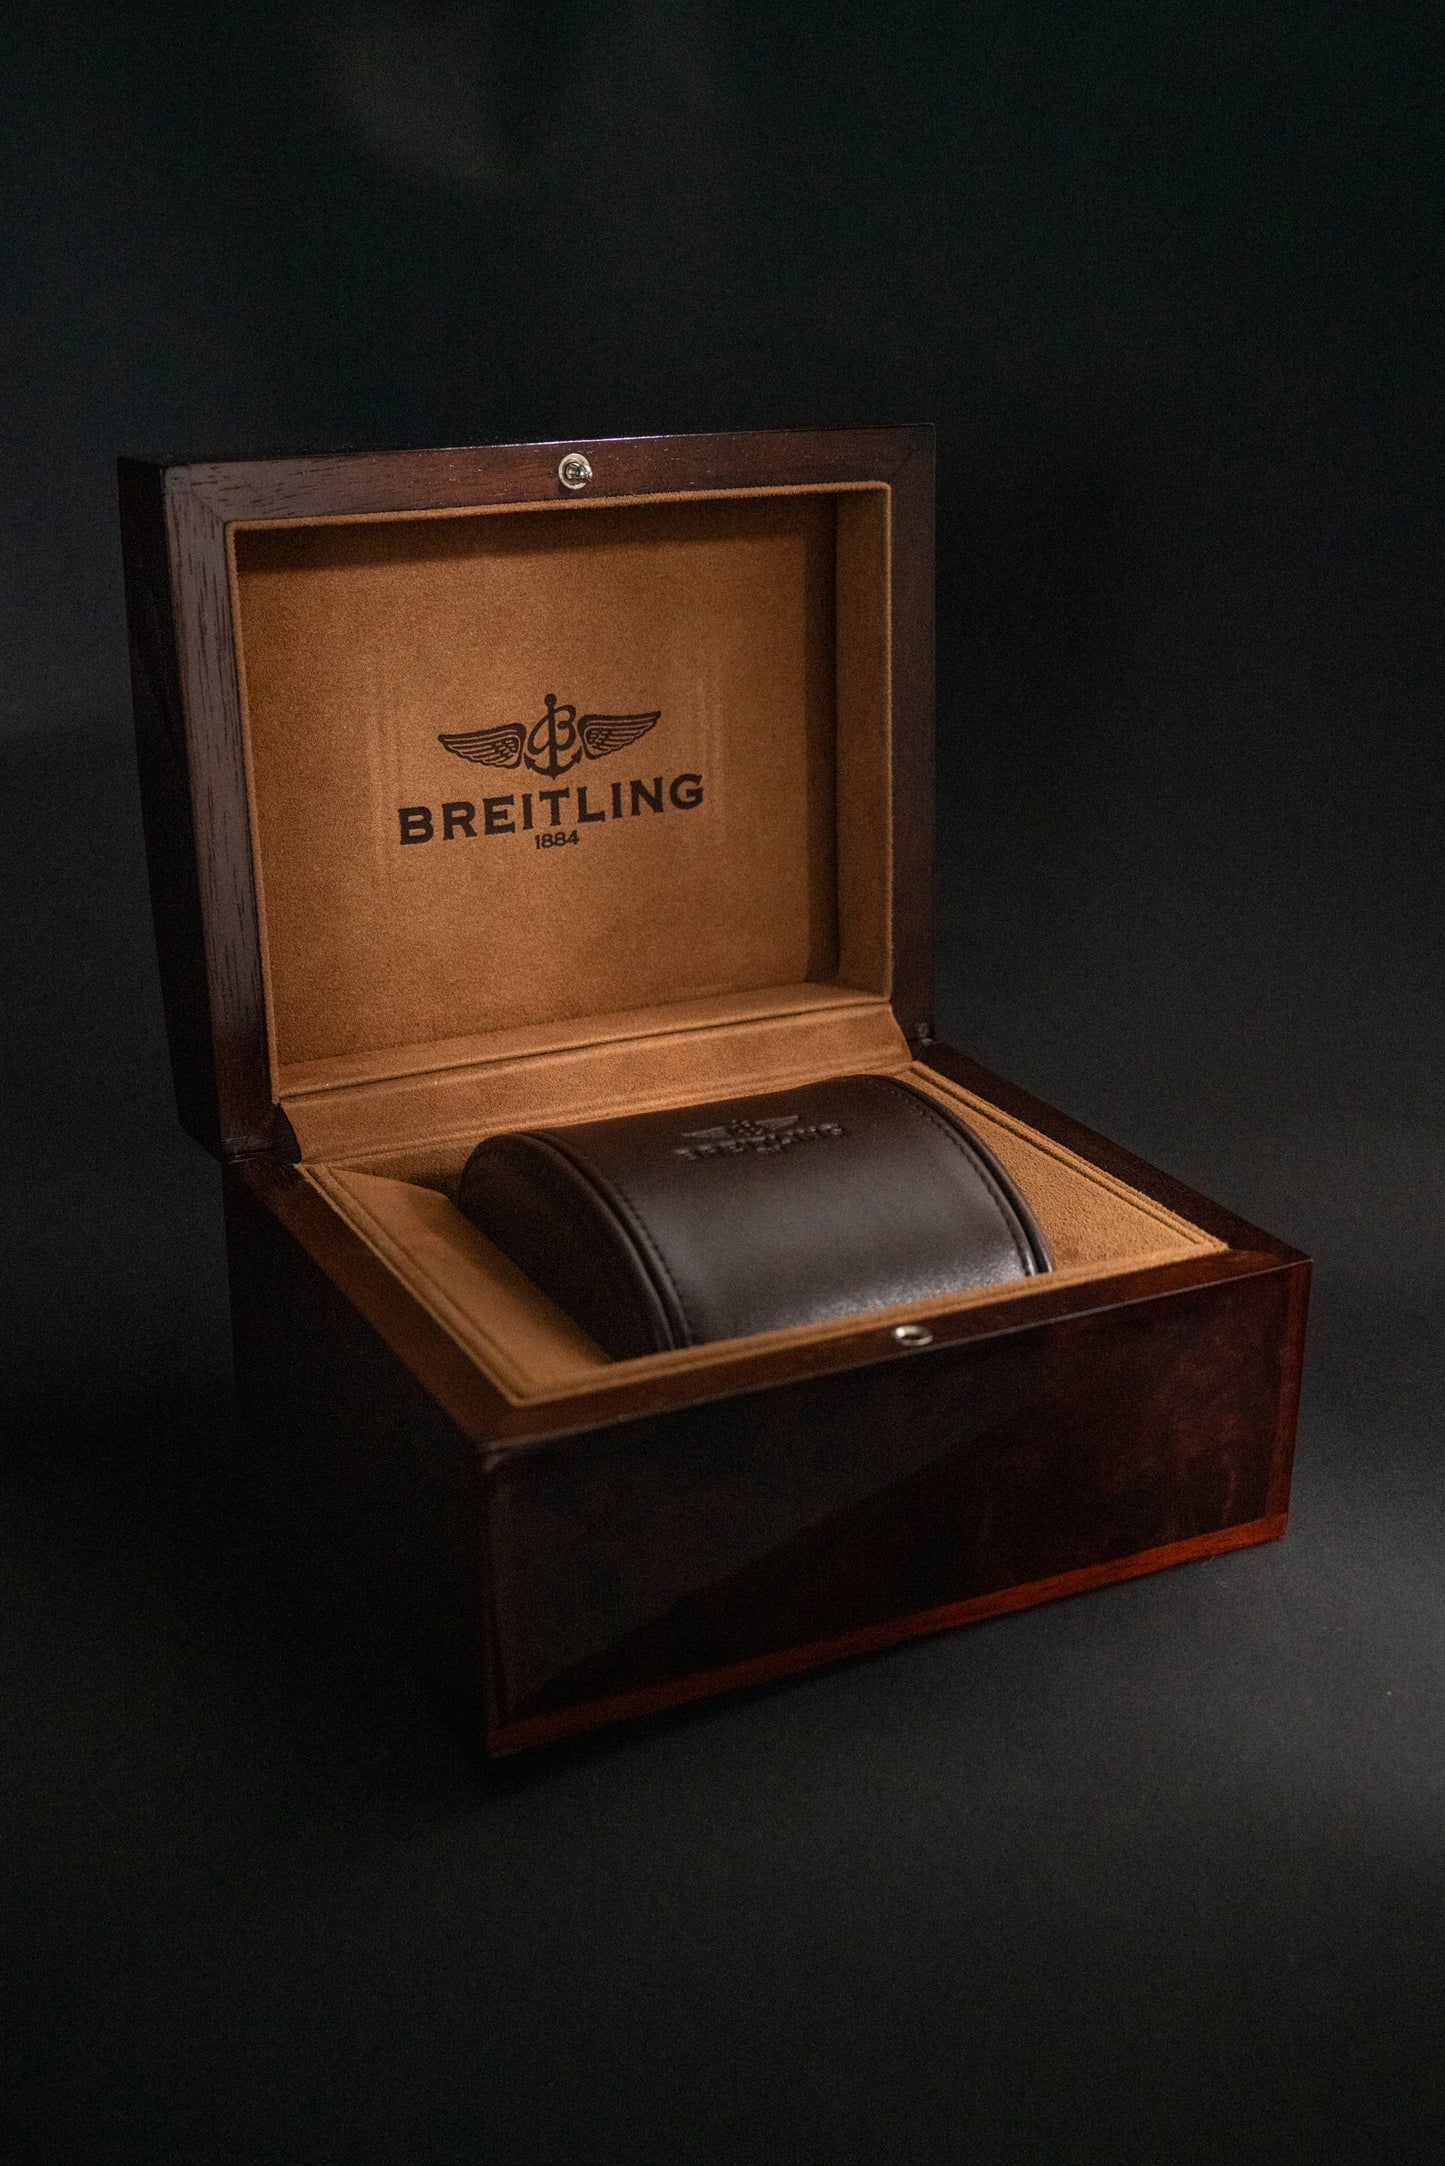 Breitling Original BREITLING Braune Uhren Box aus poliertem Holz